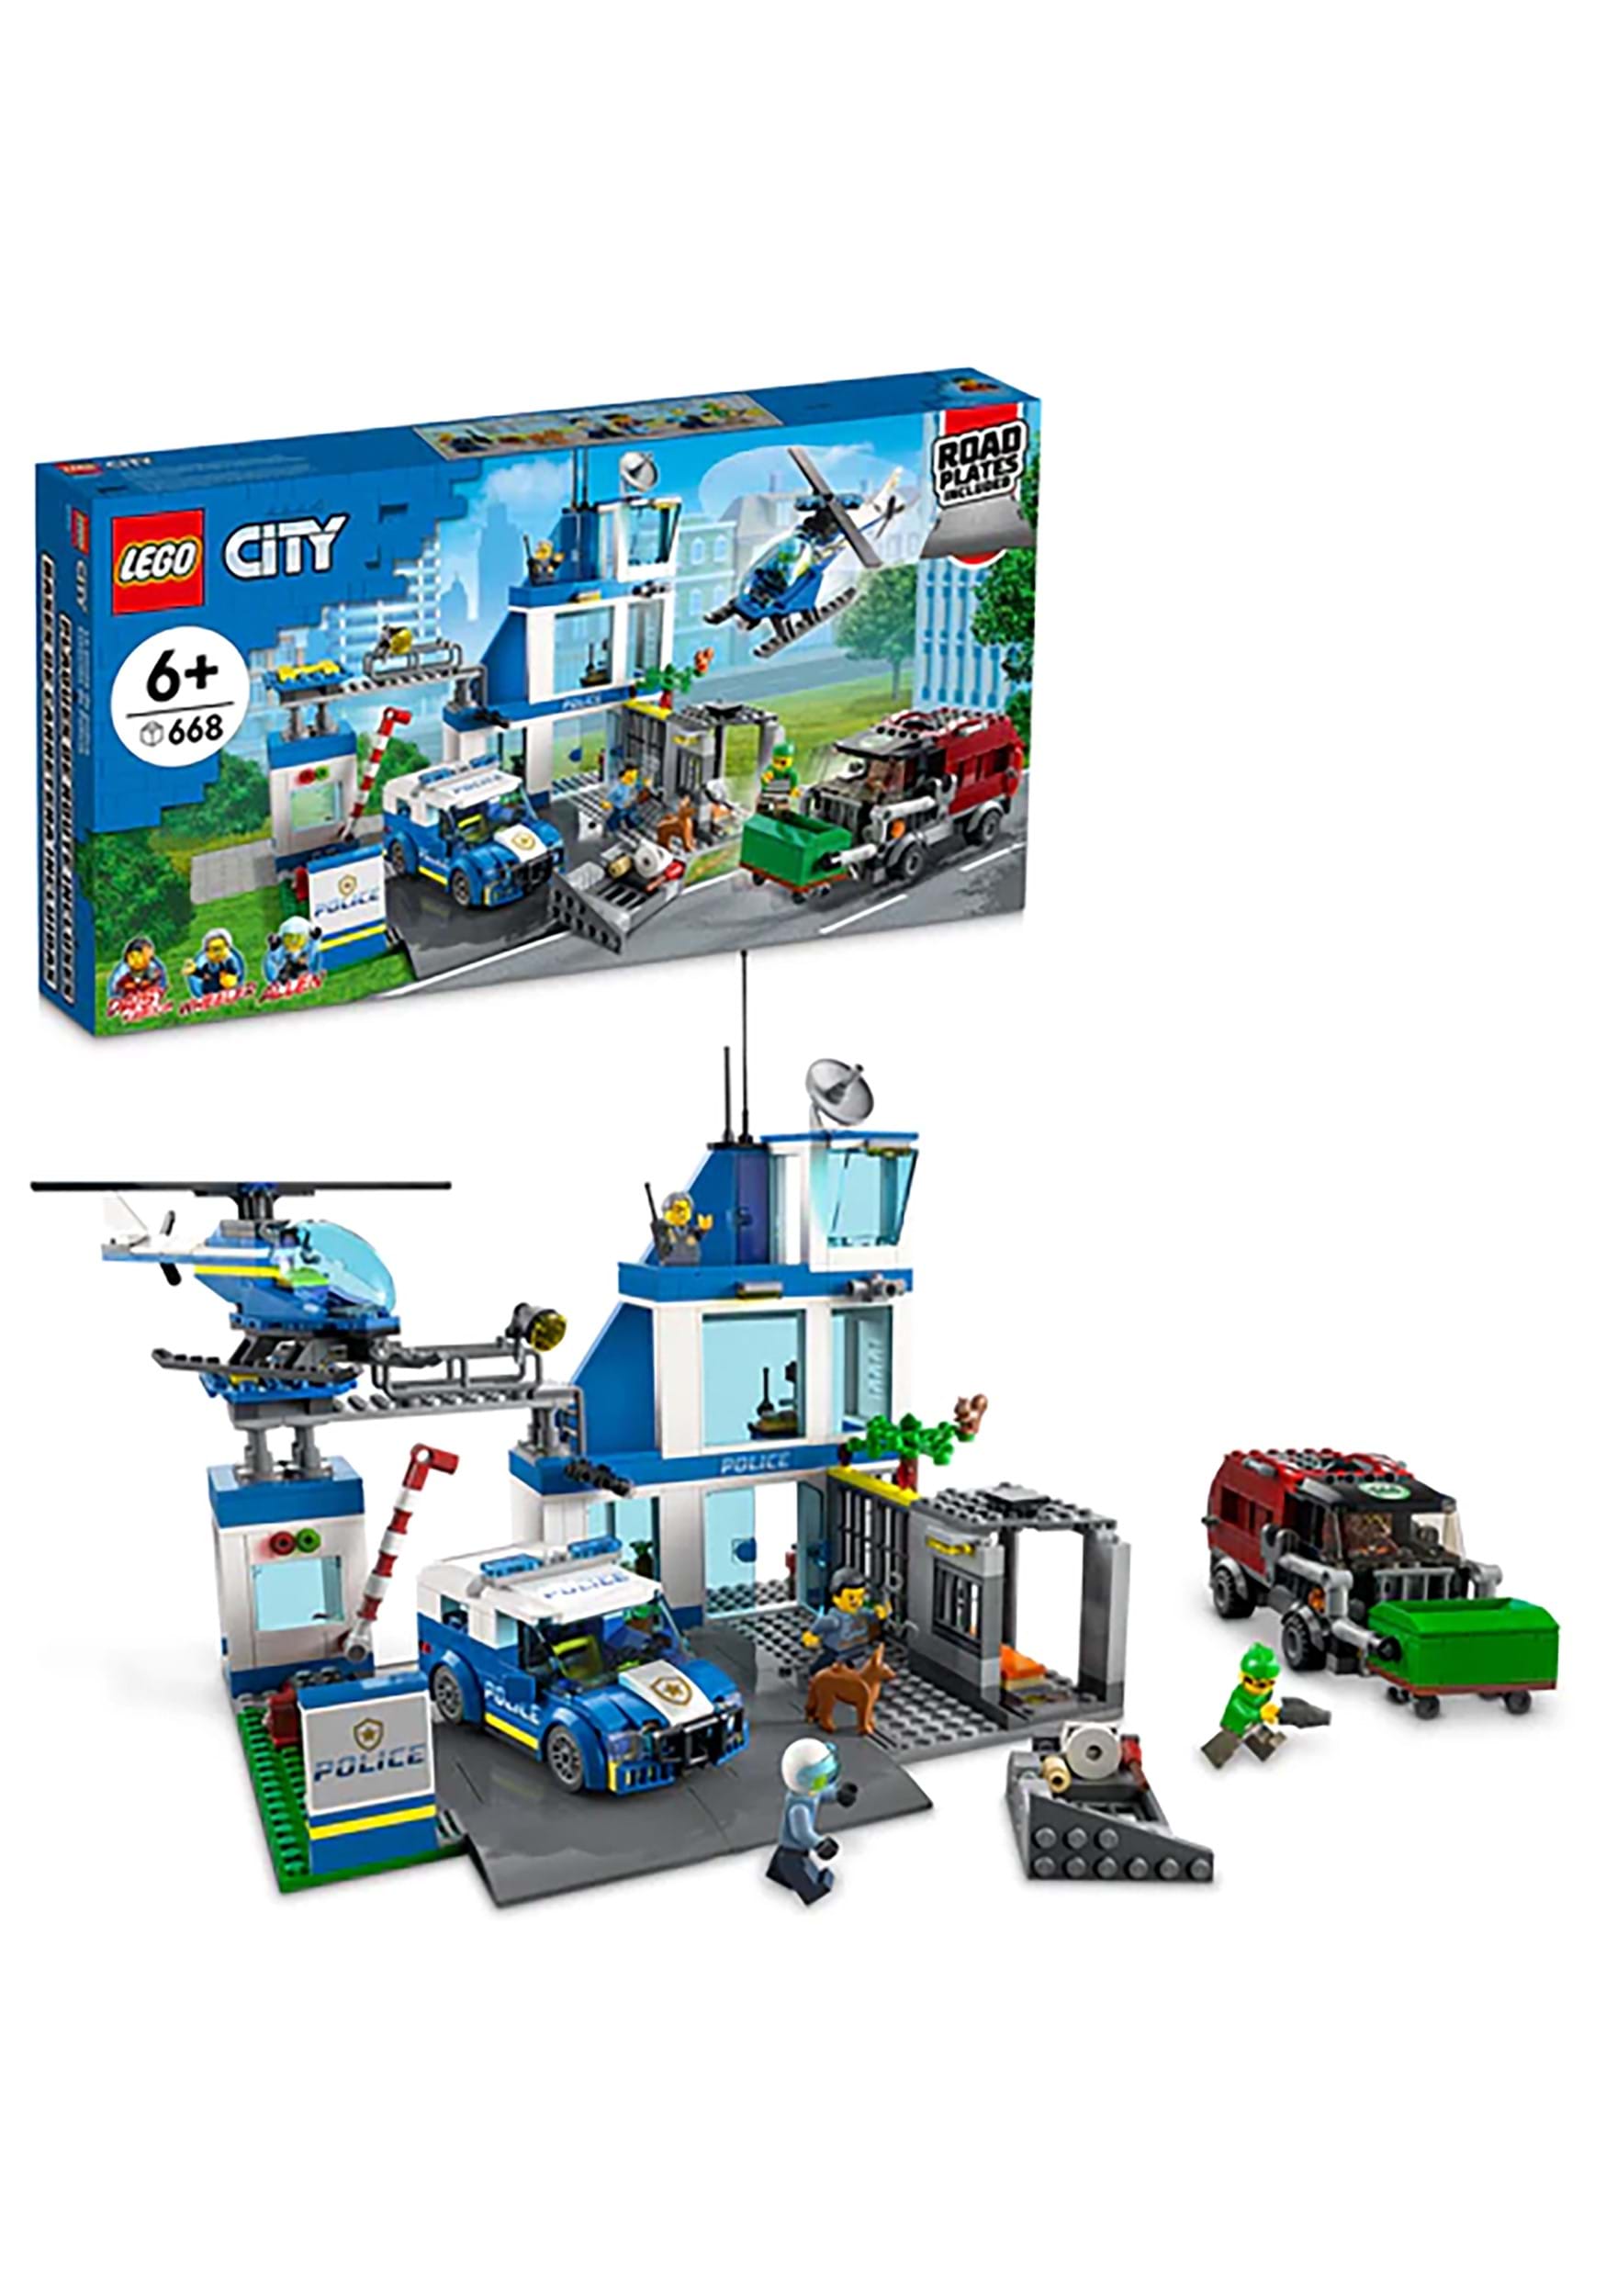 LEGO City Police Station Building Set